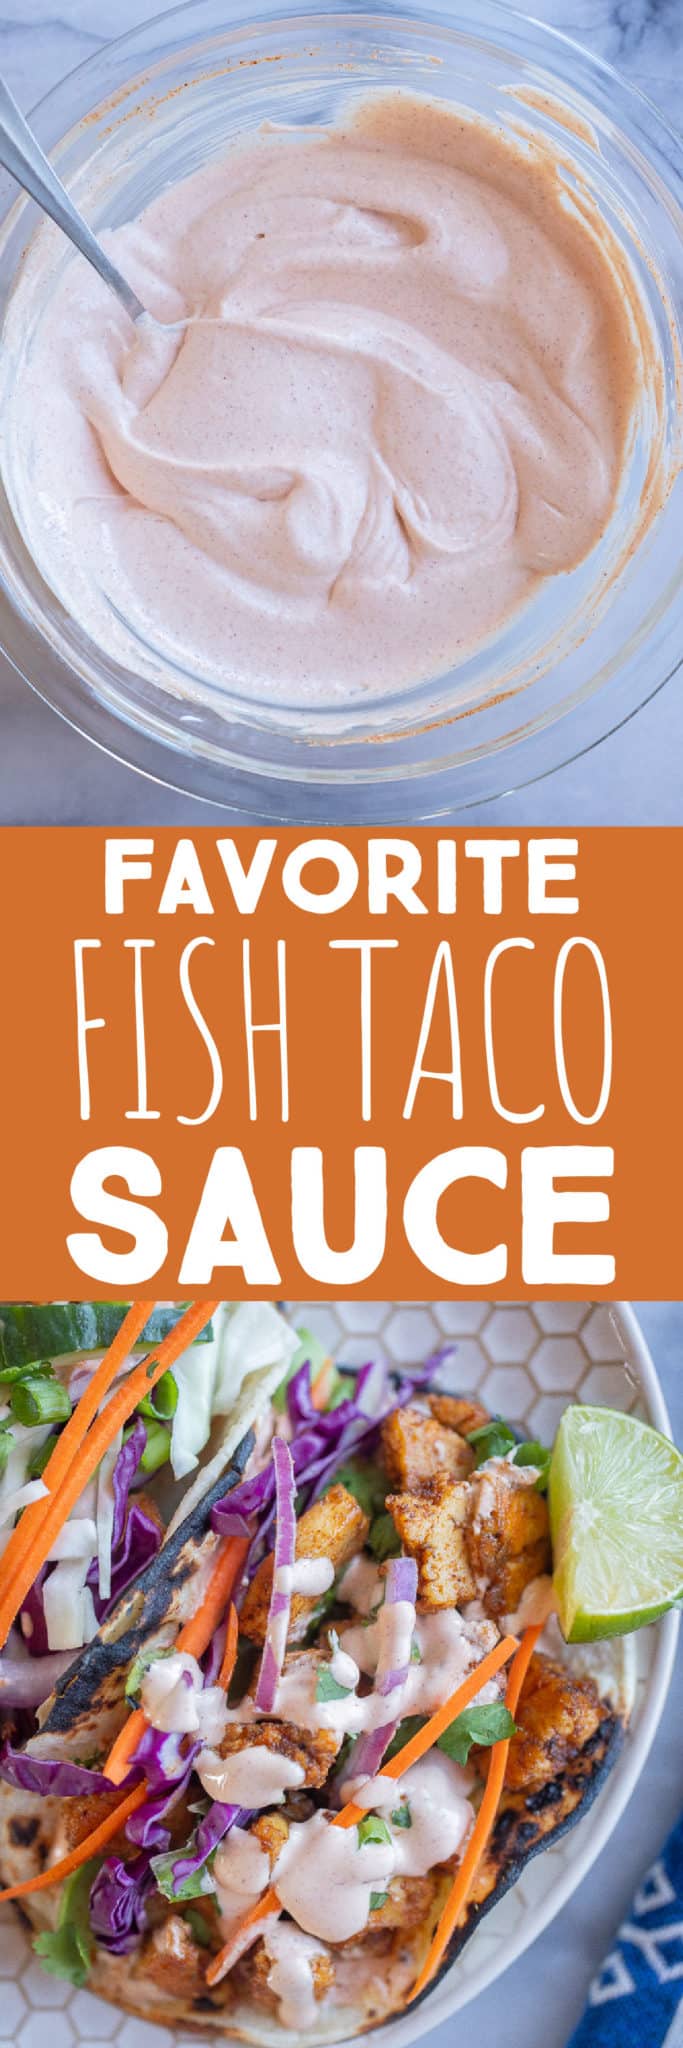 Favorite Fish Taco Sauce Recipe - She Likes Food